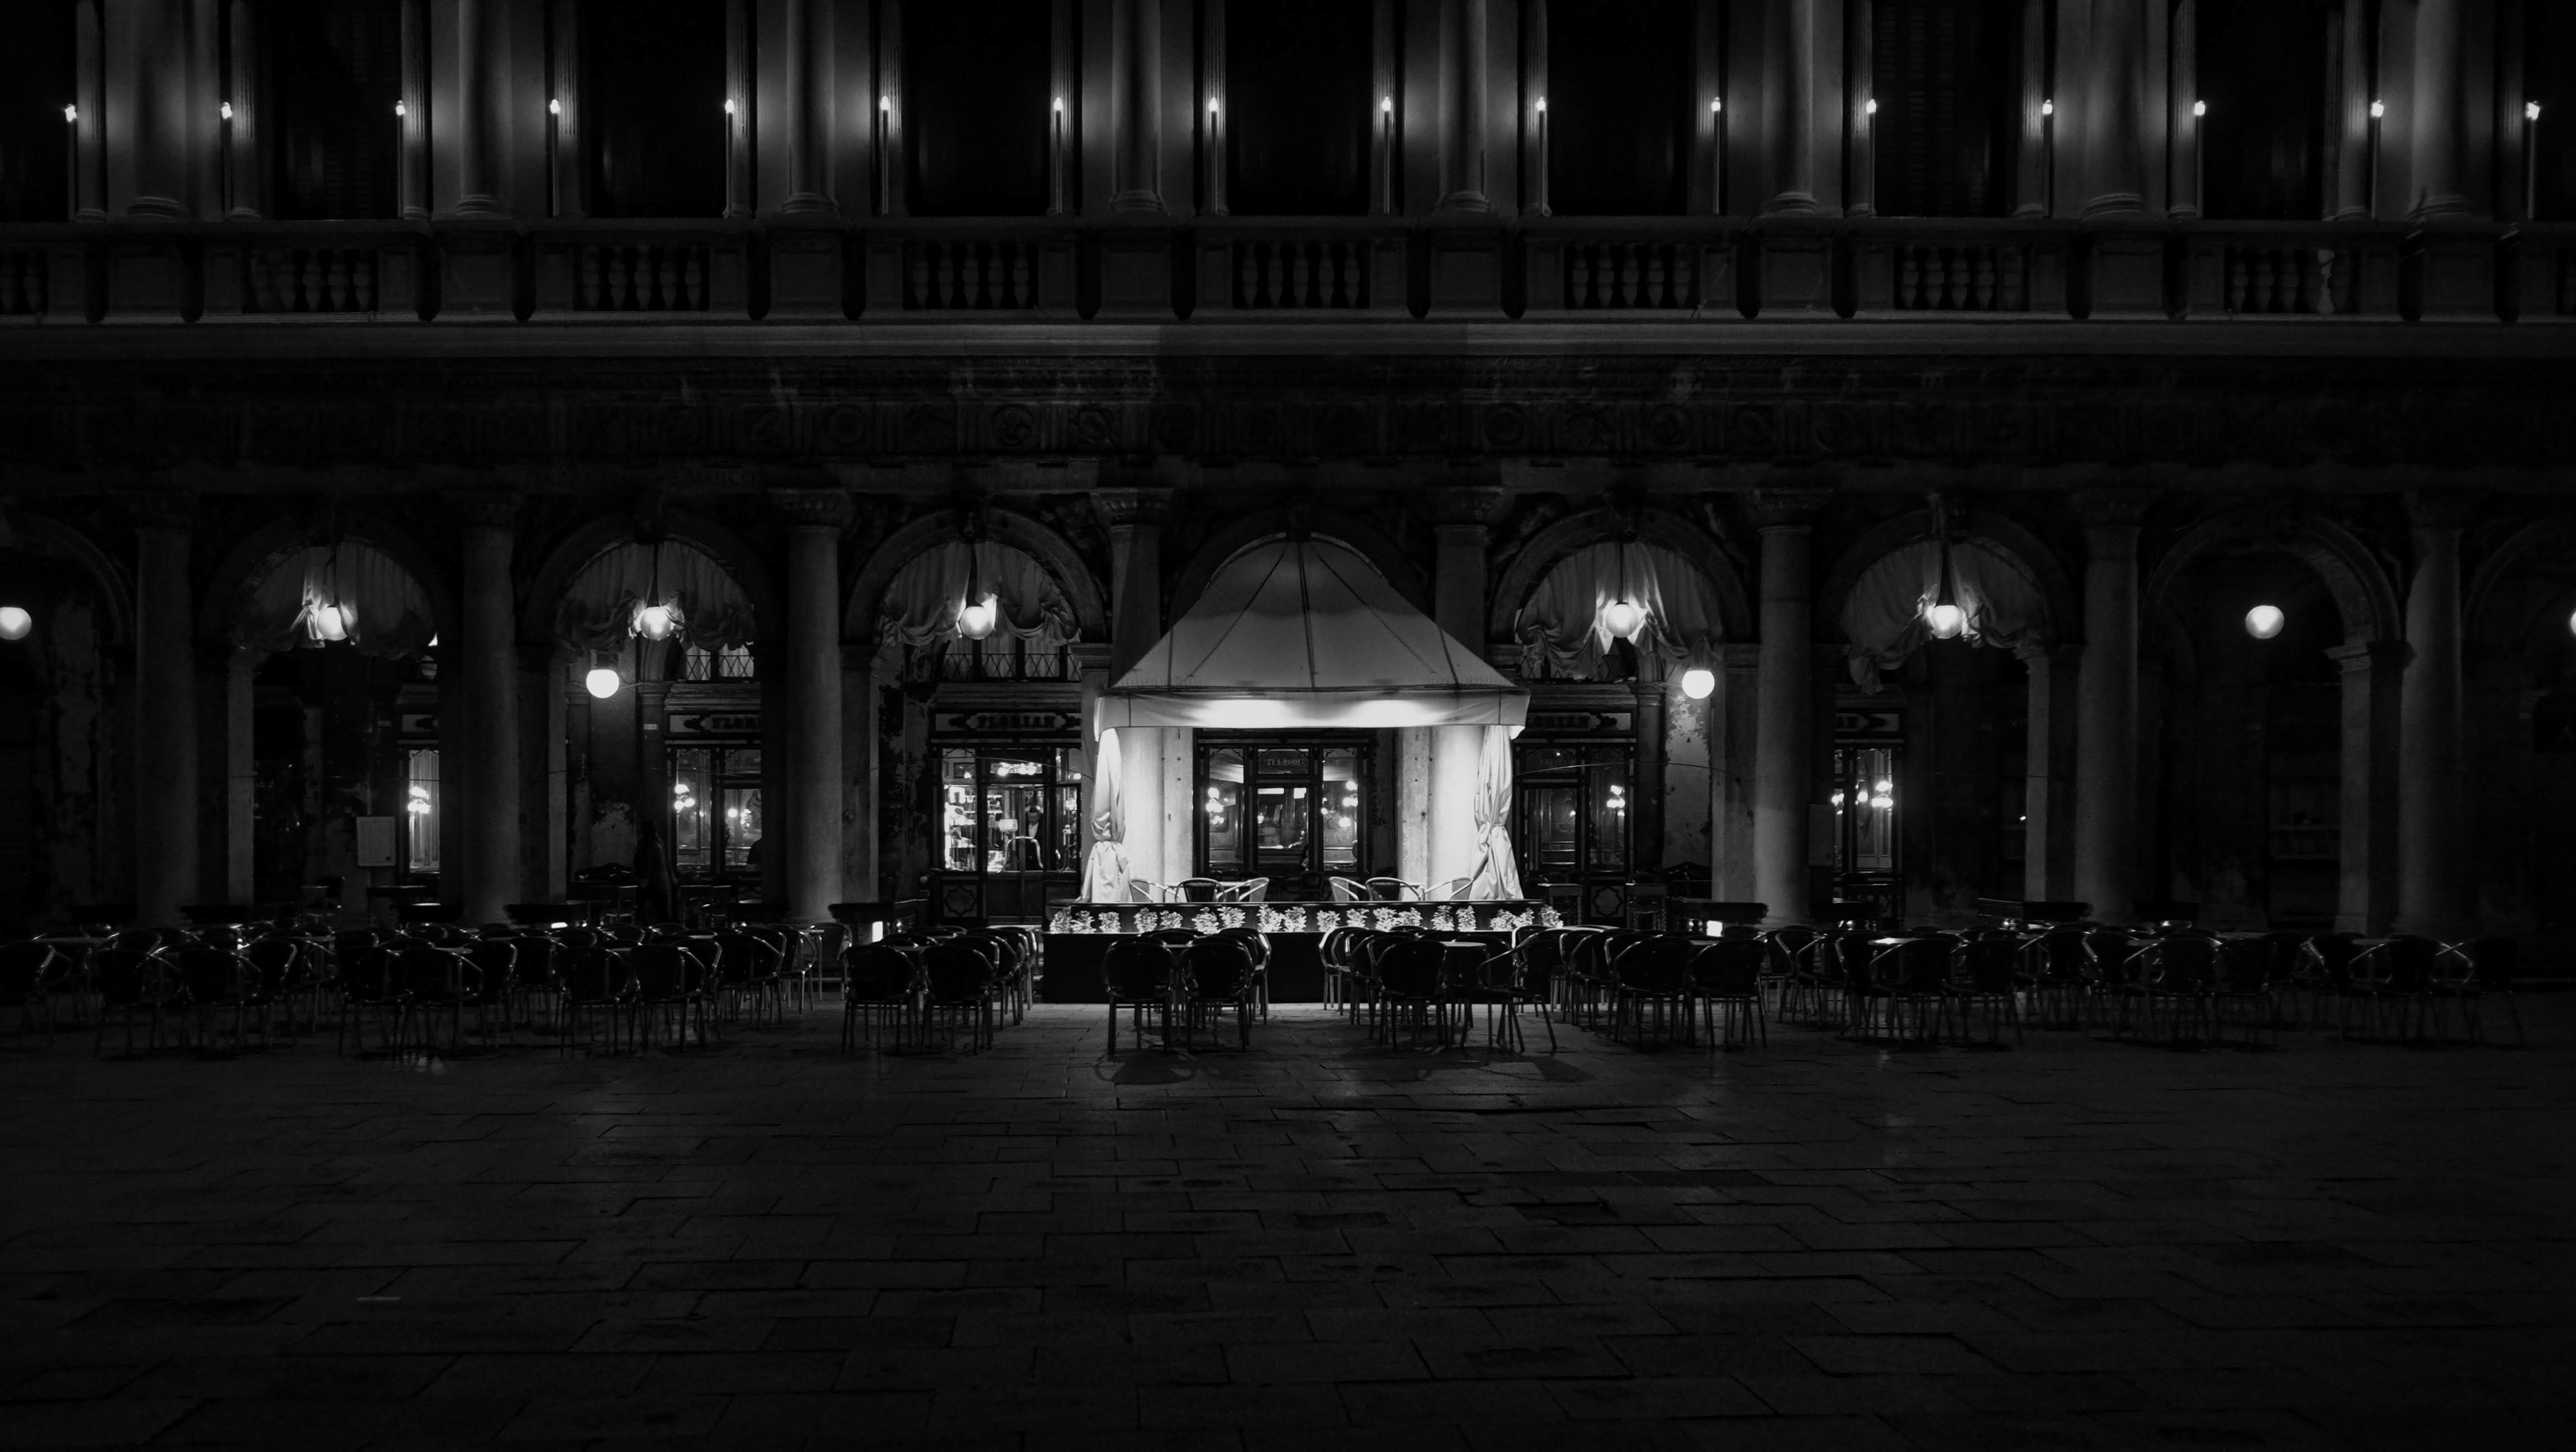 Empty Caffè Florian at night